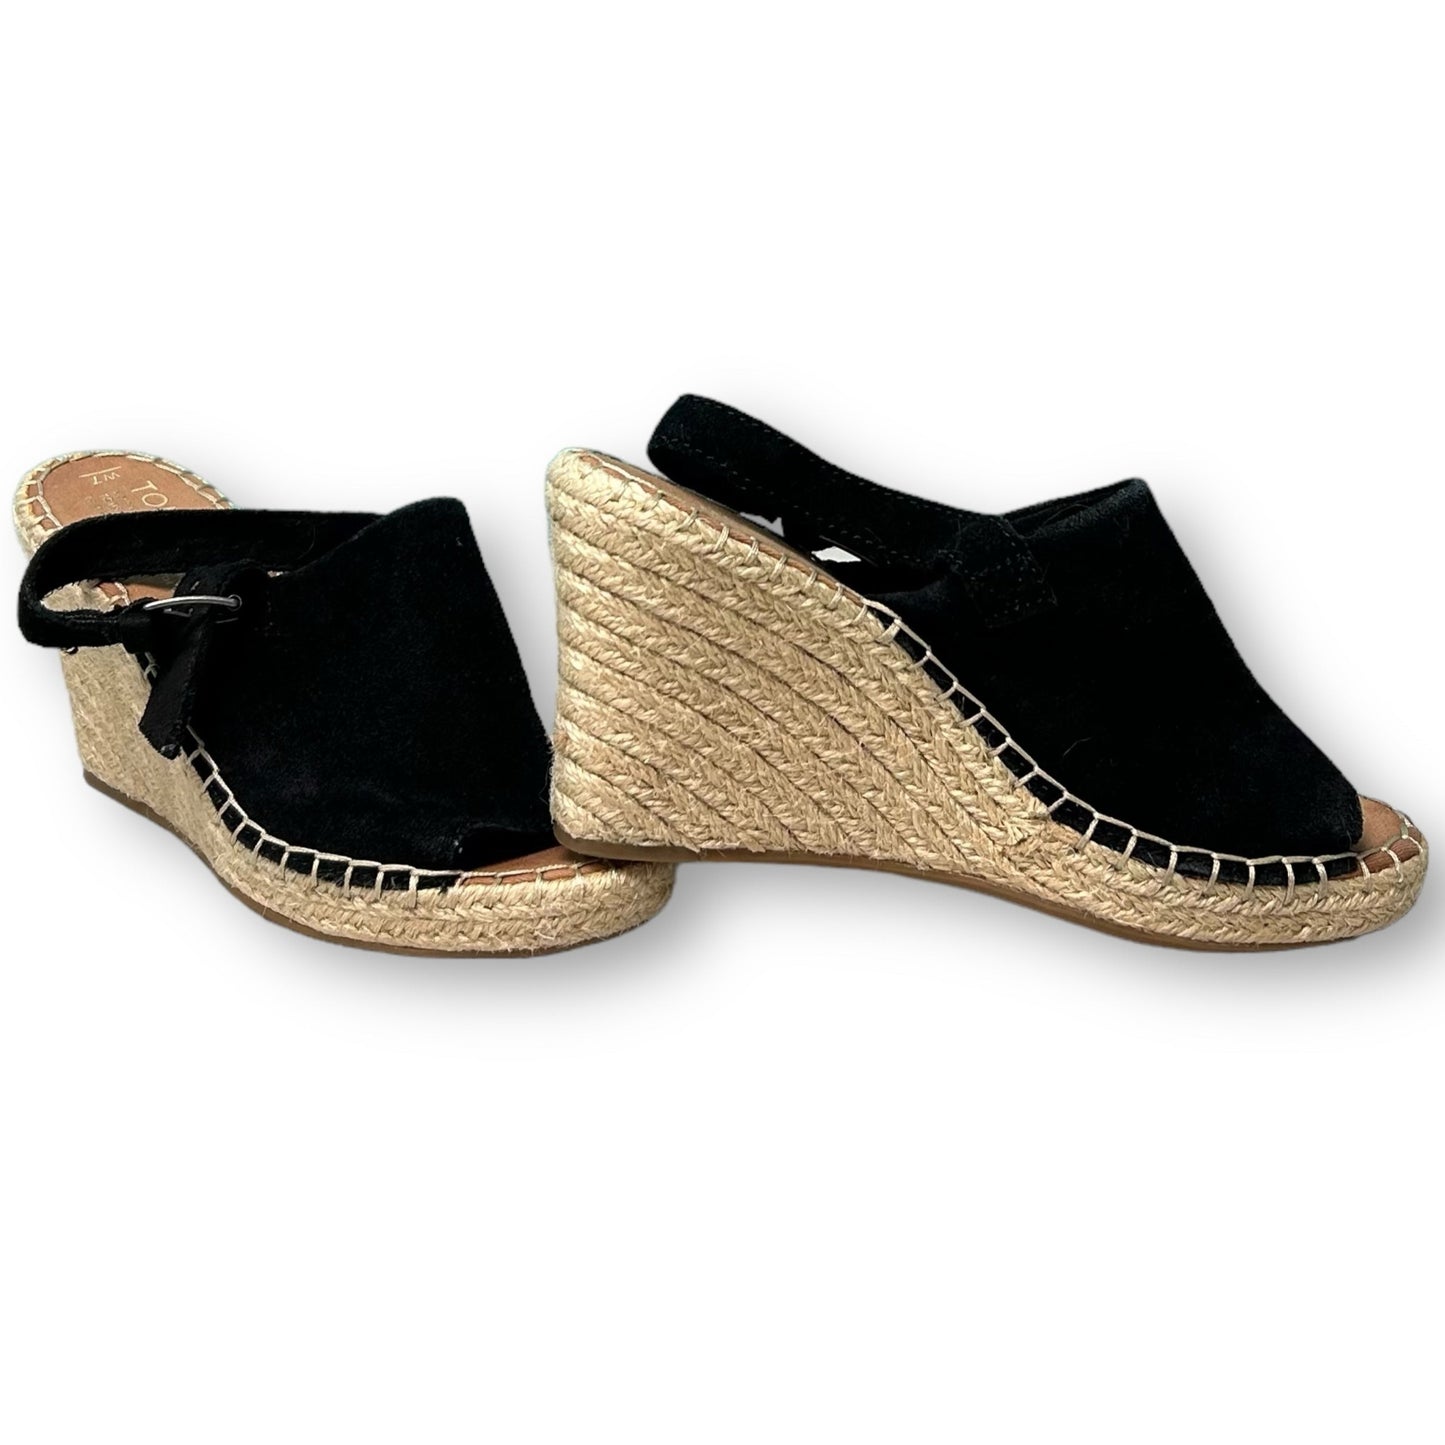 Toms Womens Size 7 Black Suede & Hemp Wedge Open-Toe Buckle Sandals